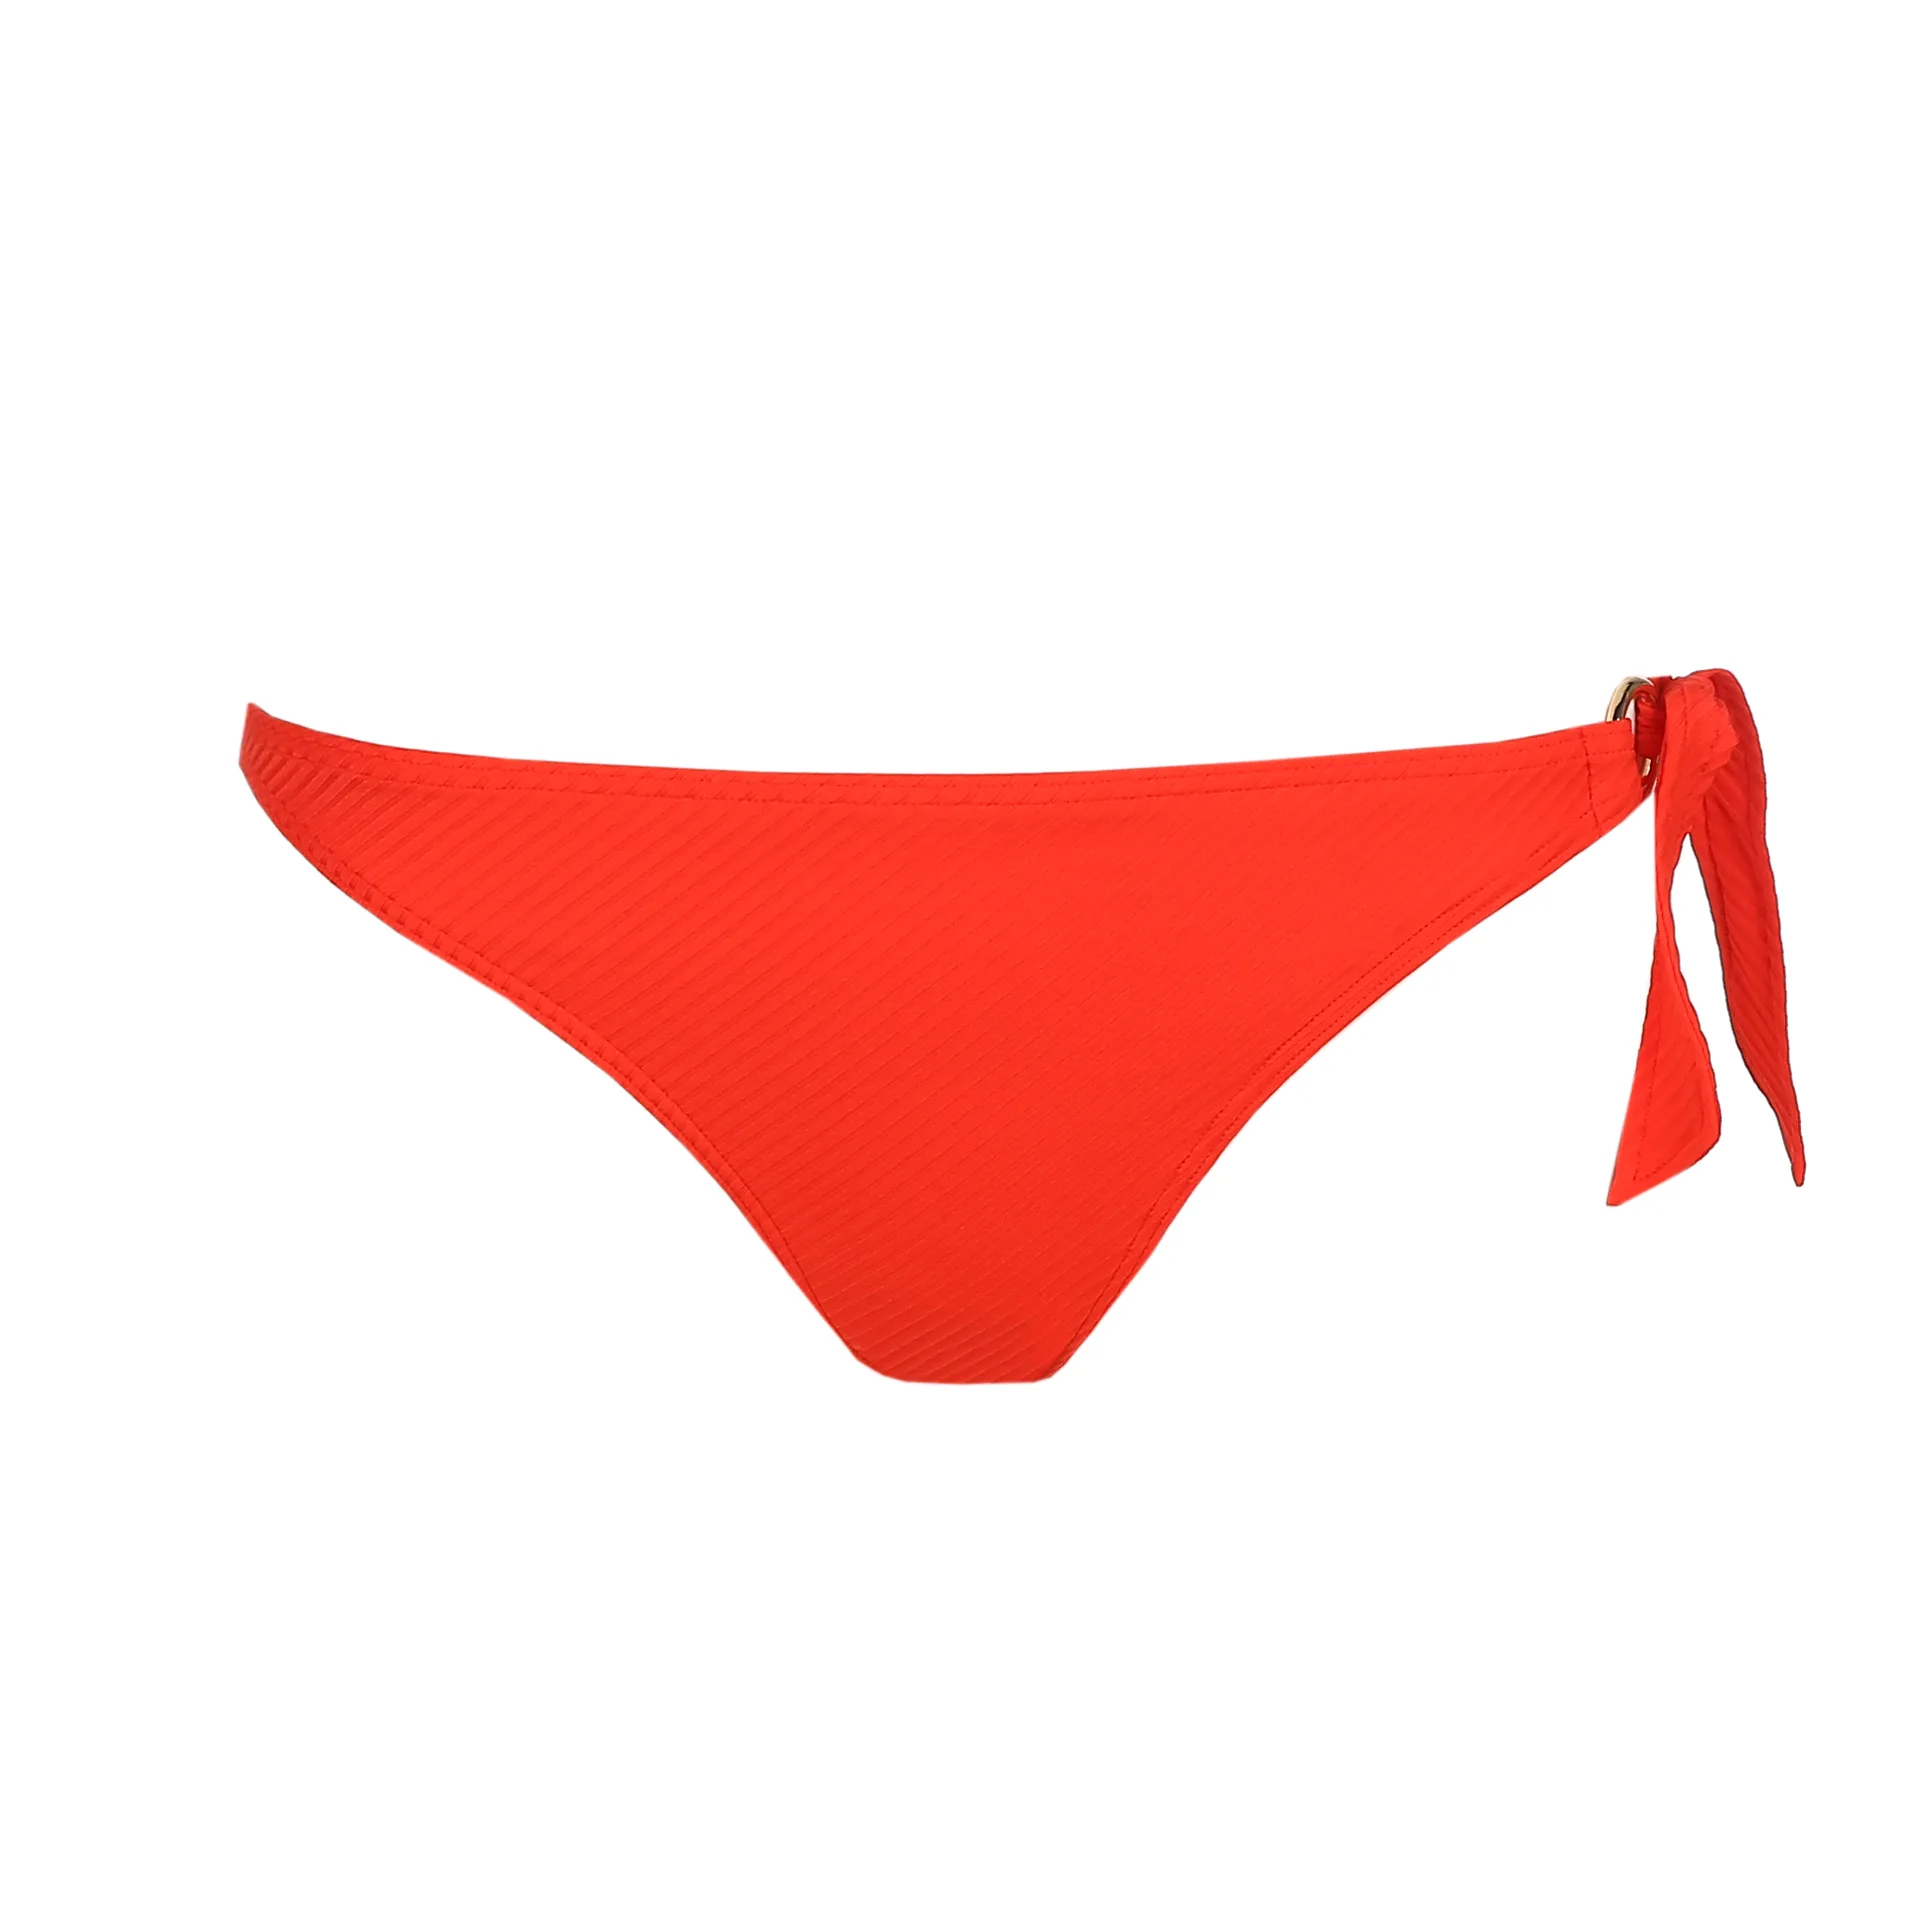 PrimaDonna Swim Sahara Red Pepper bikini briefs waist ropes | Rigby ...